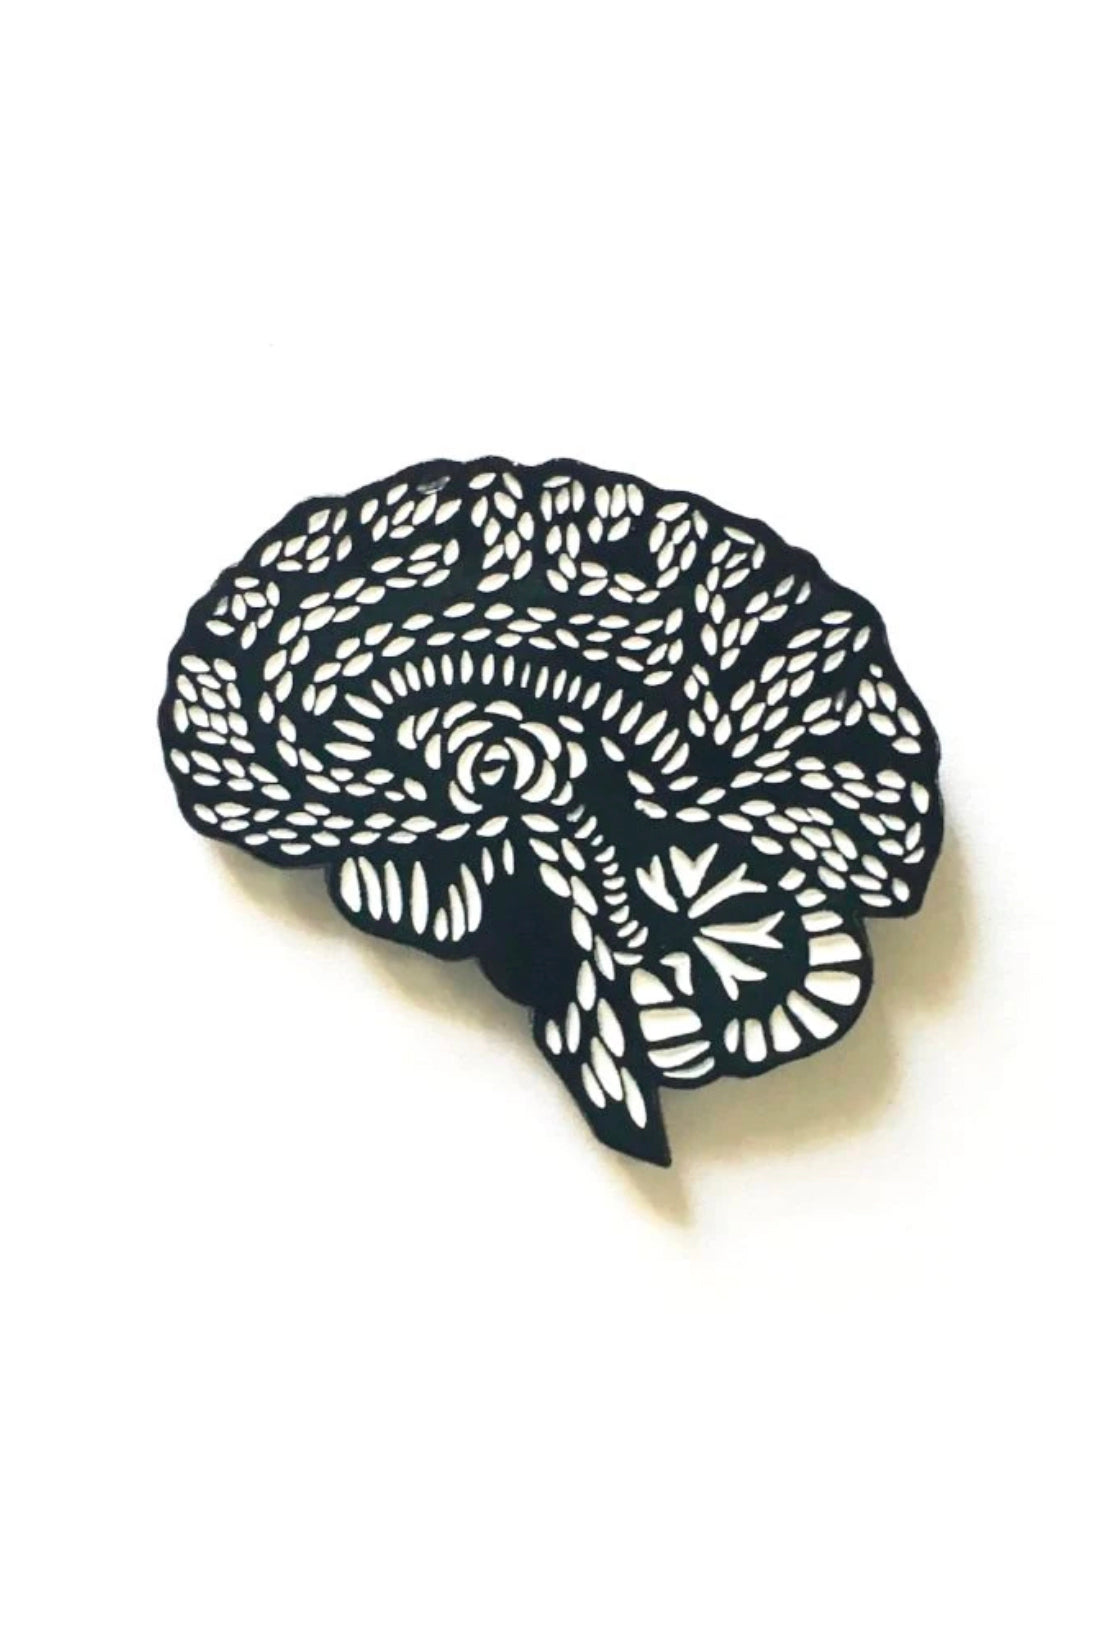 Light + Paper Enamel Pin -Brain